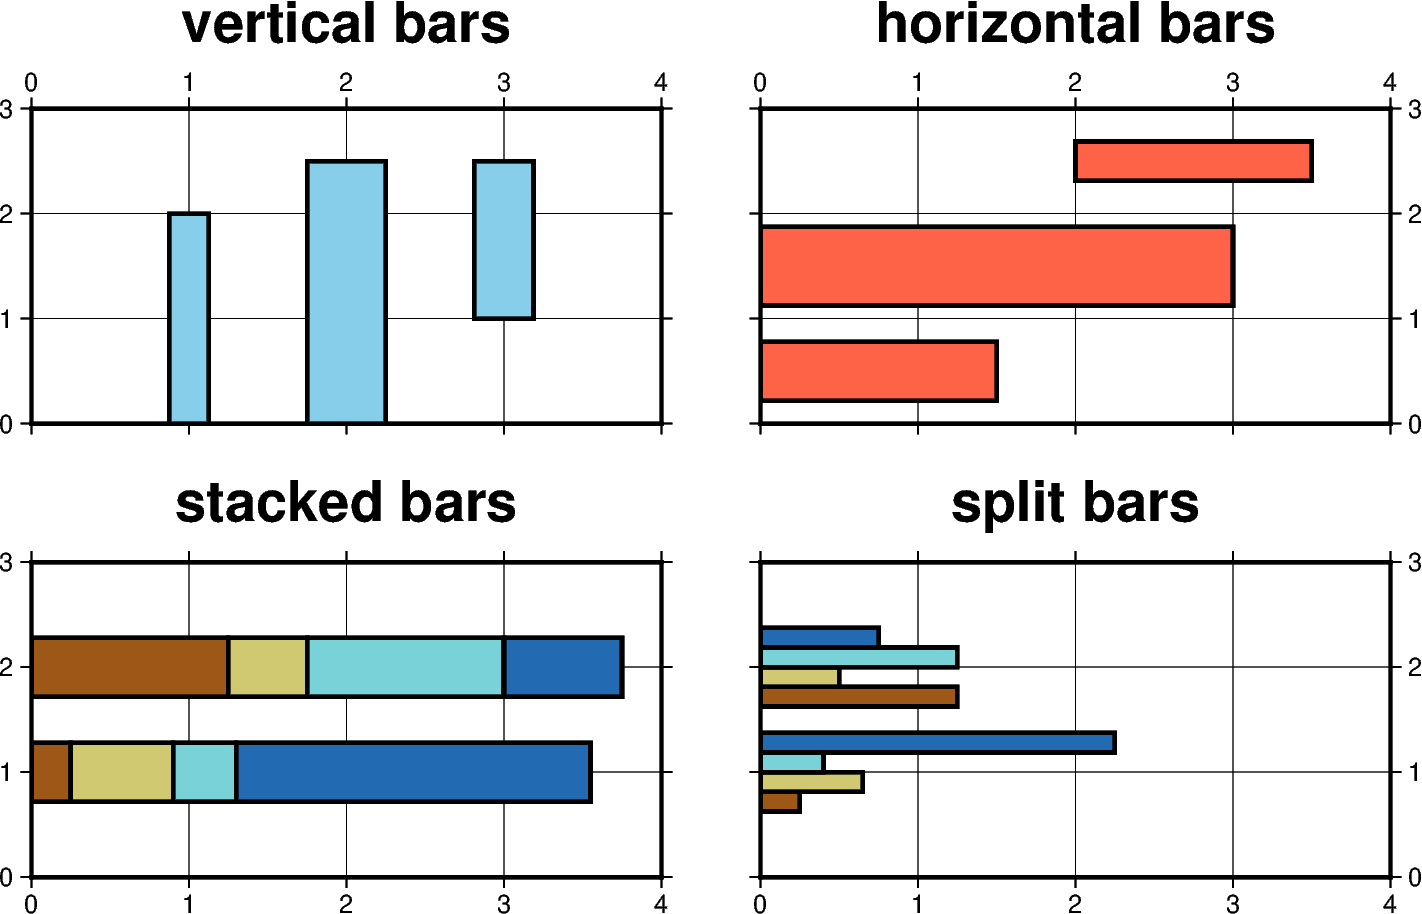 Vertical and horizontal bars